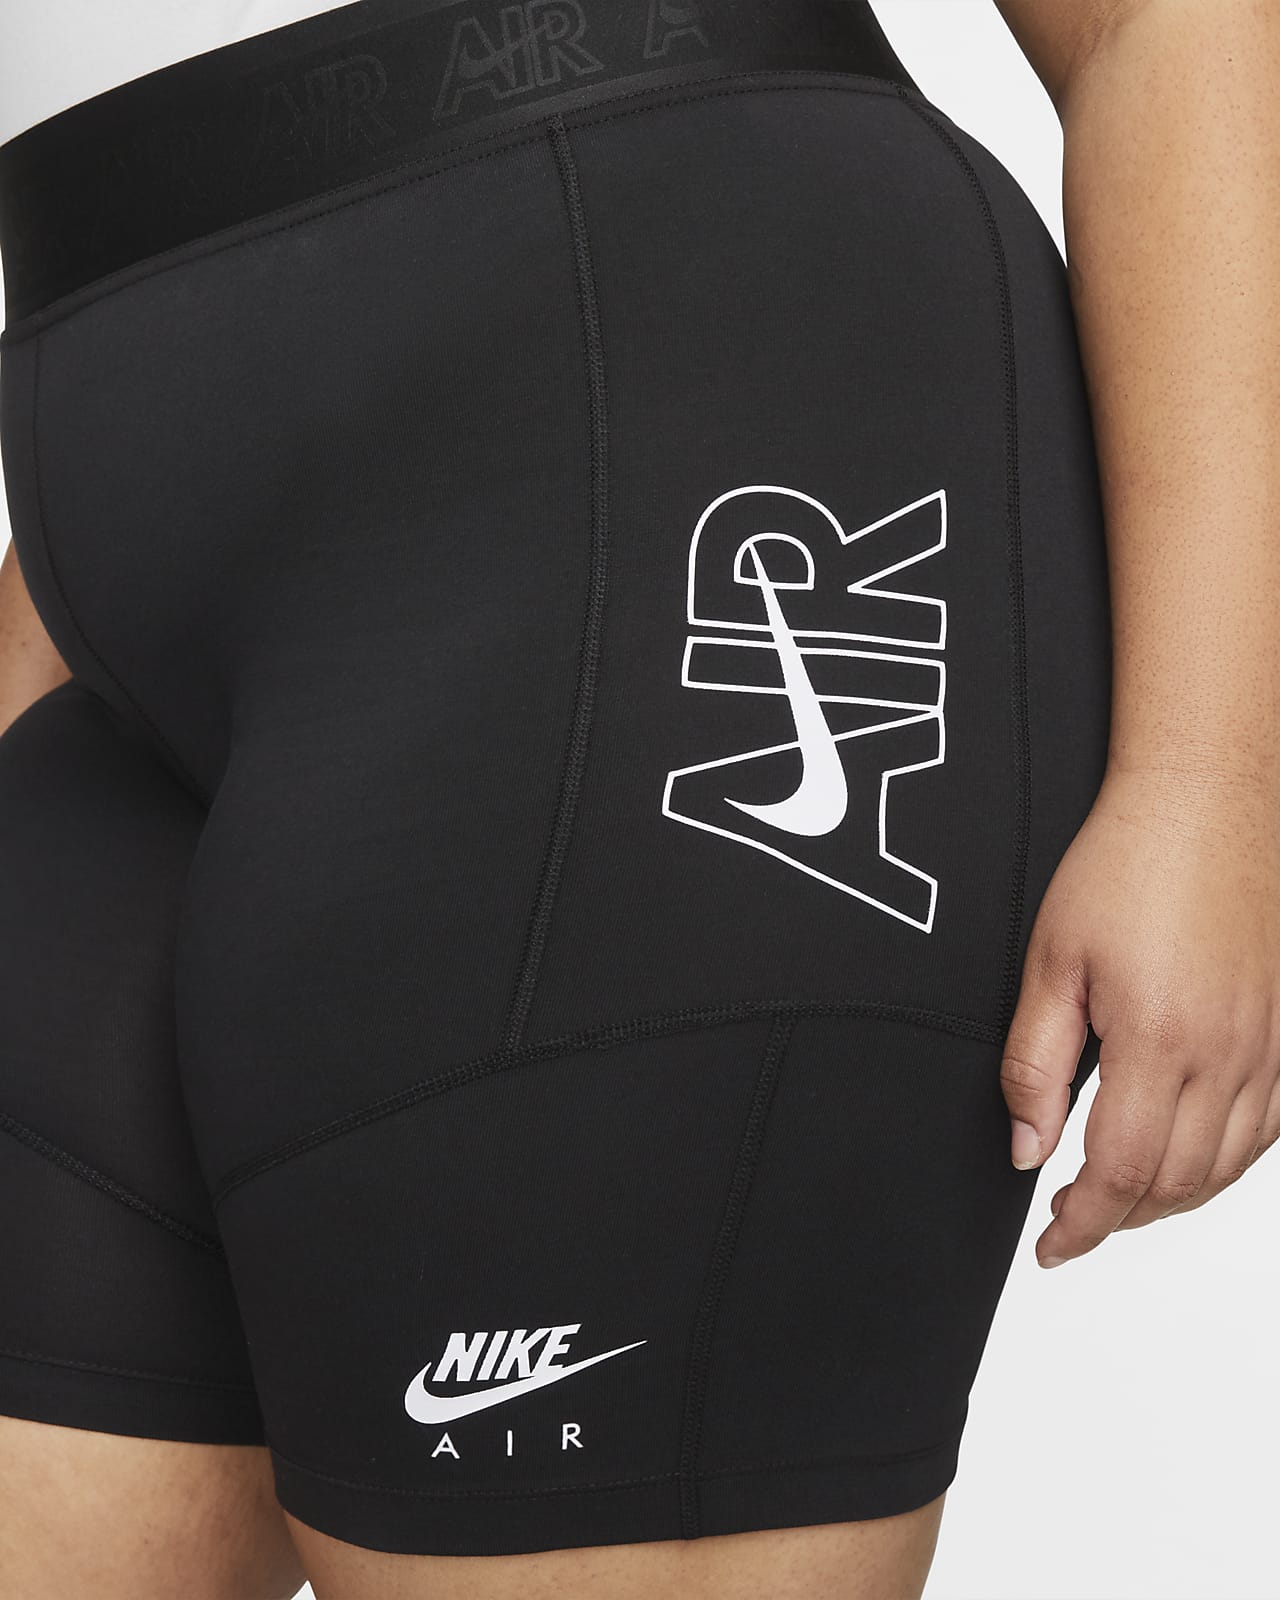 Nike Air Women's Bike Shorts (Plus Size 